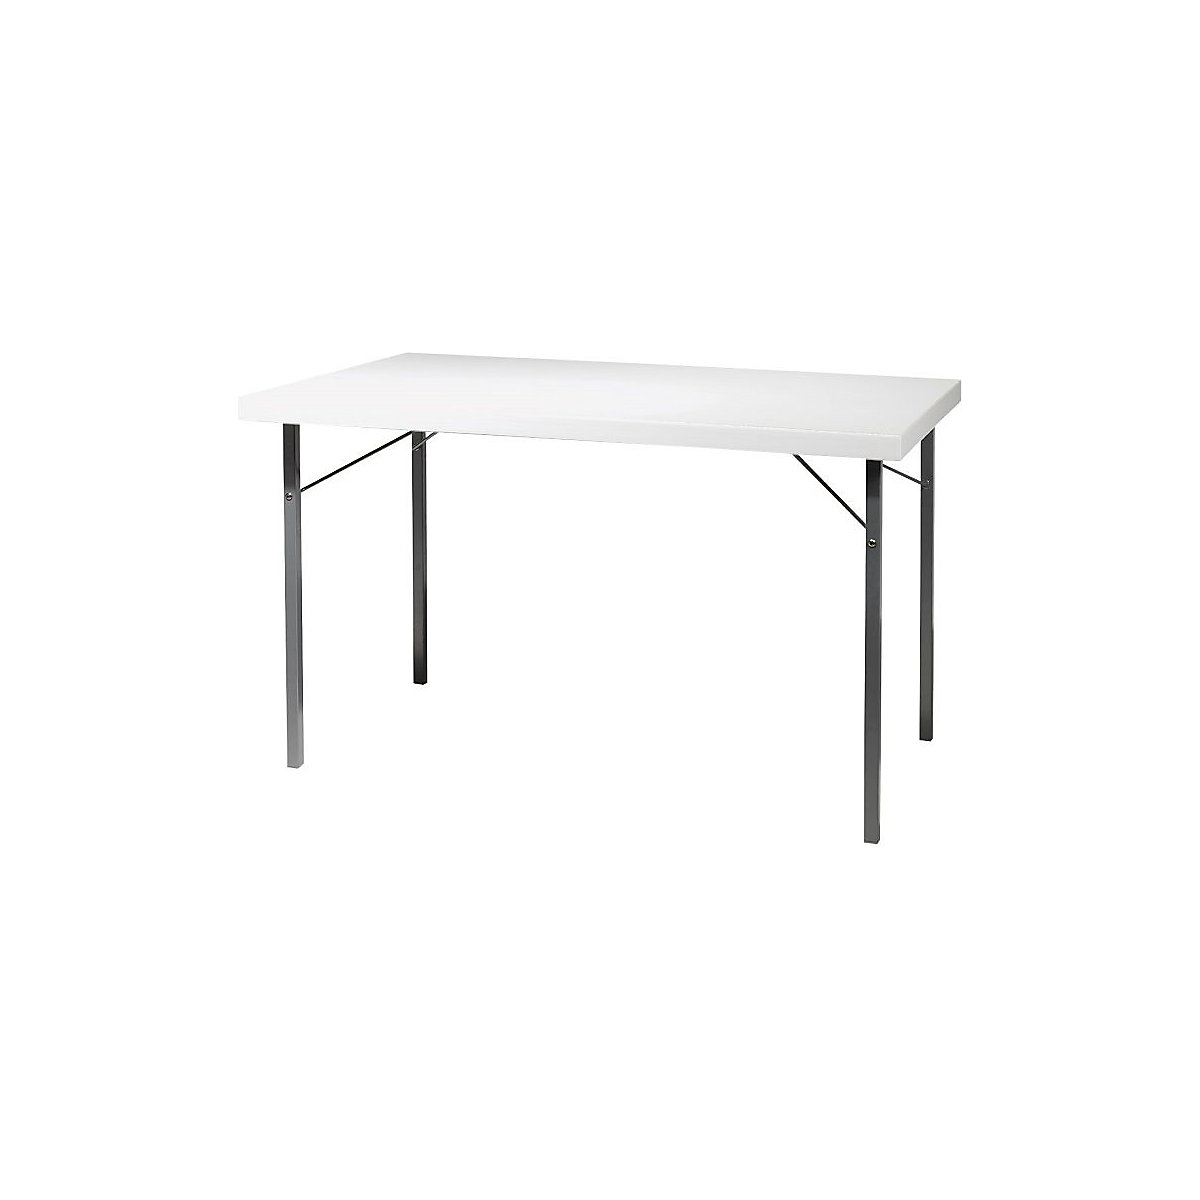 Inklapbare tafel, frame van metaal, aluminiumzilver, b x d = 1200 x 800 mm, wit bovenblad-2